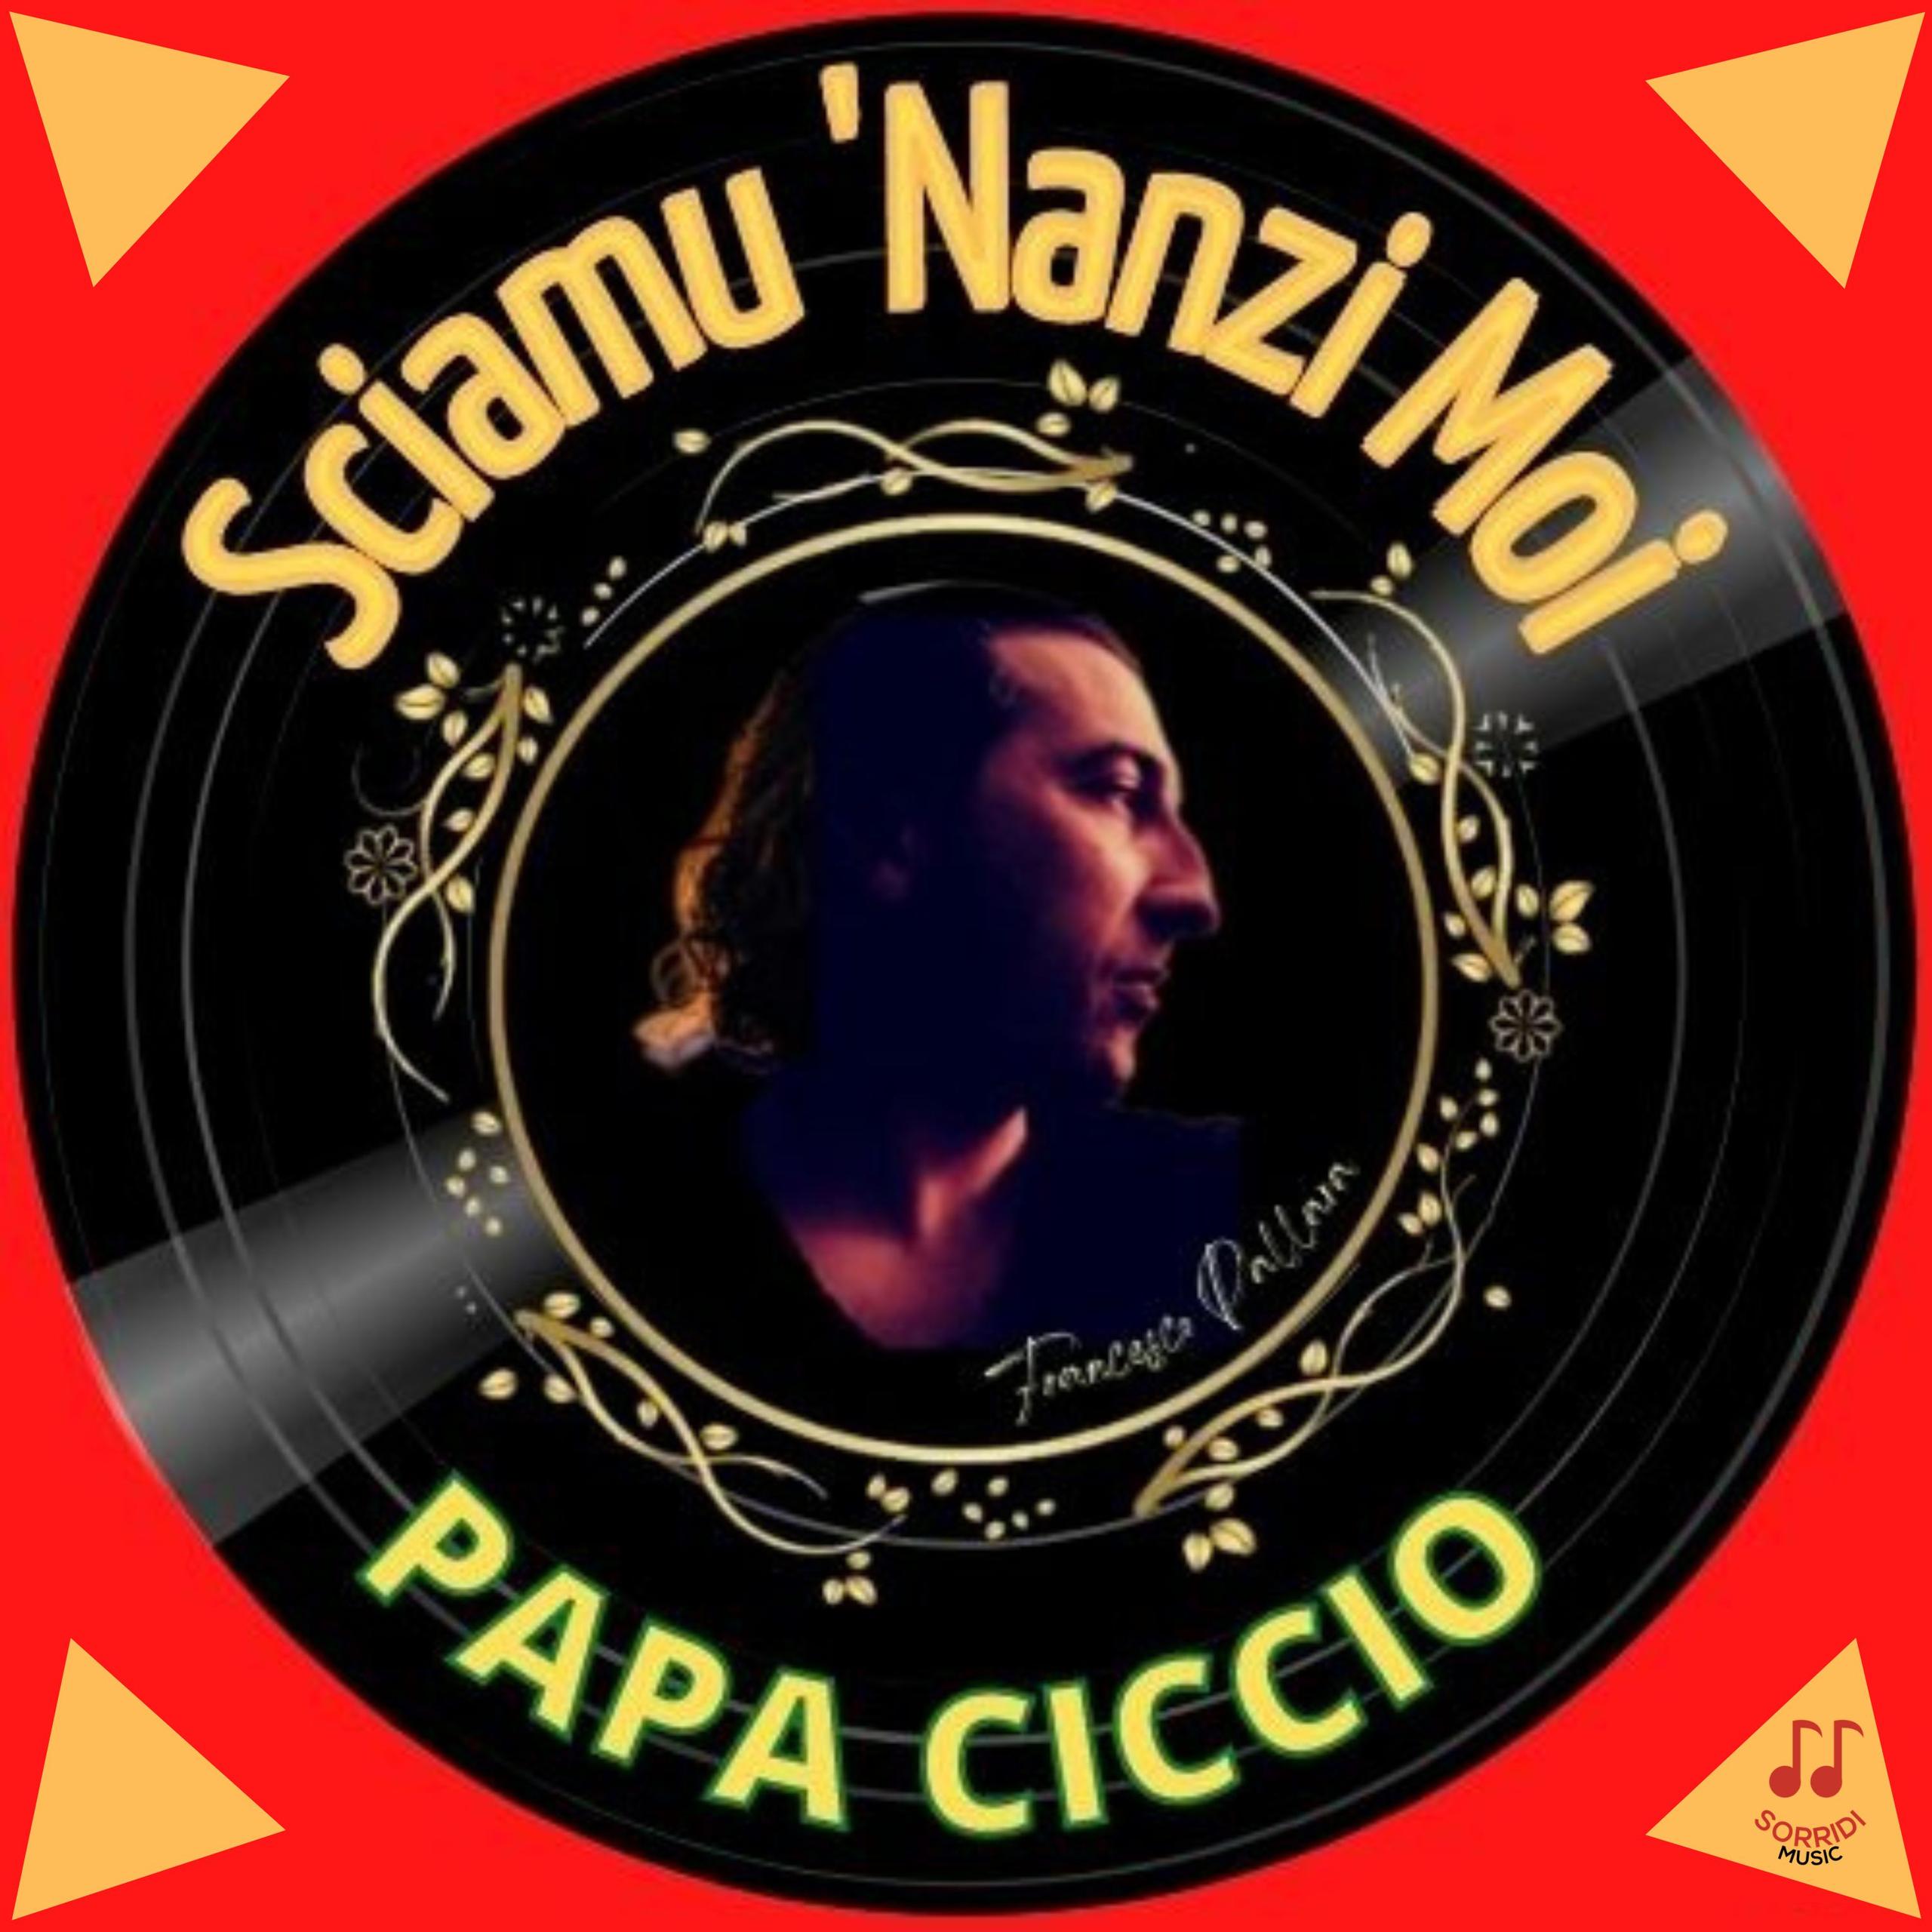 Sciamu Nanzi Moi - Francesco